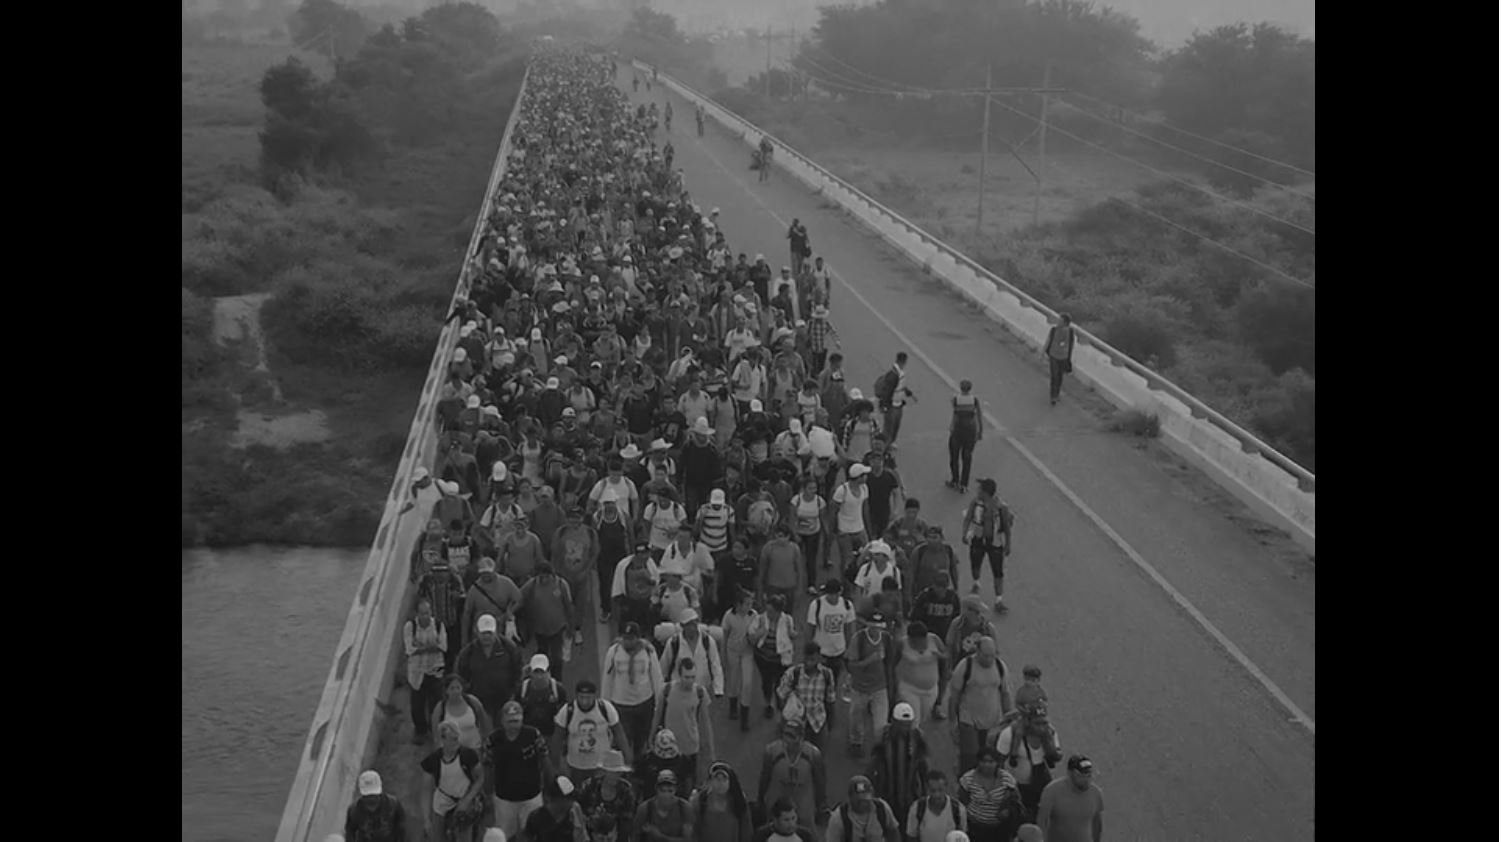 Magnum Photographer Shot "Migrant Caravan" Short Film on Super 8